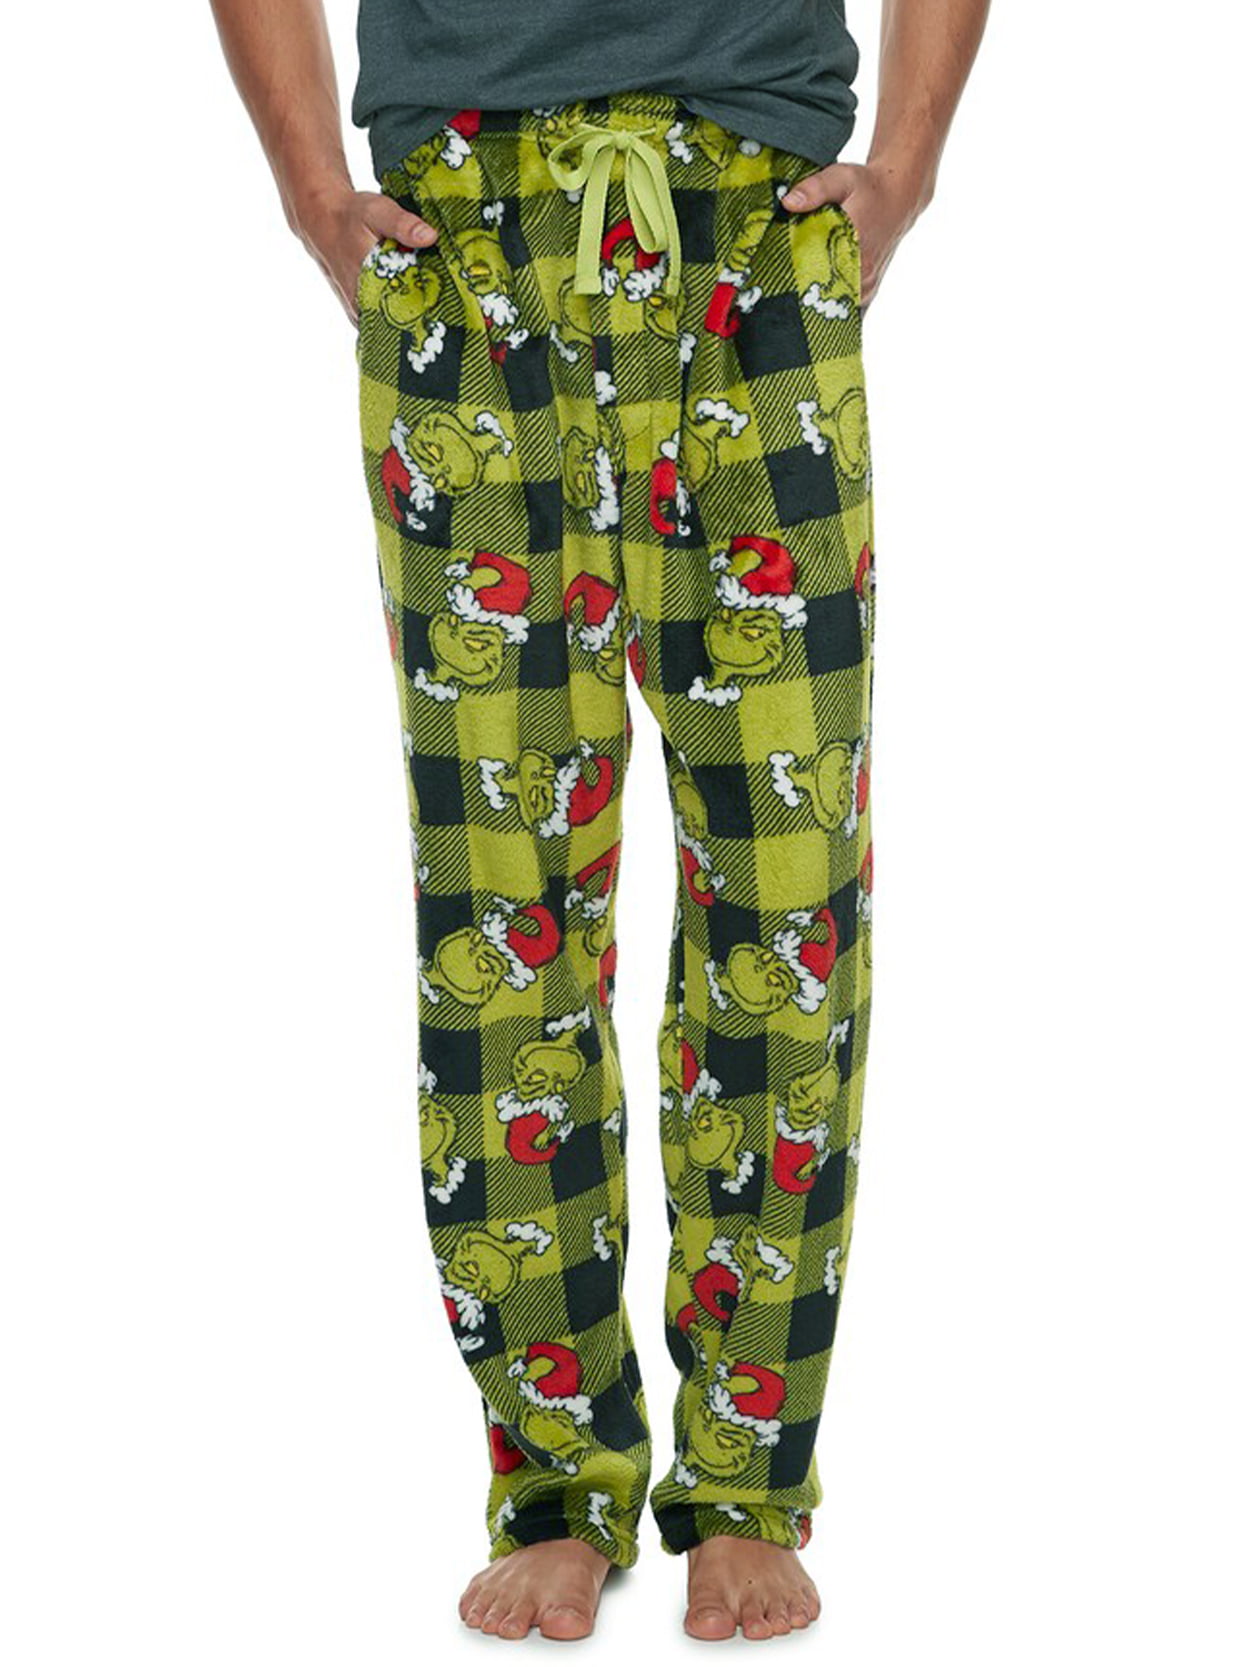 HiWelcome The Grinch Sweatpants Christmas Pants New Year Pants Sleep Sweatpants Funny Pajamas Pants for Women.